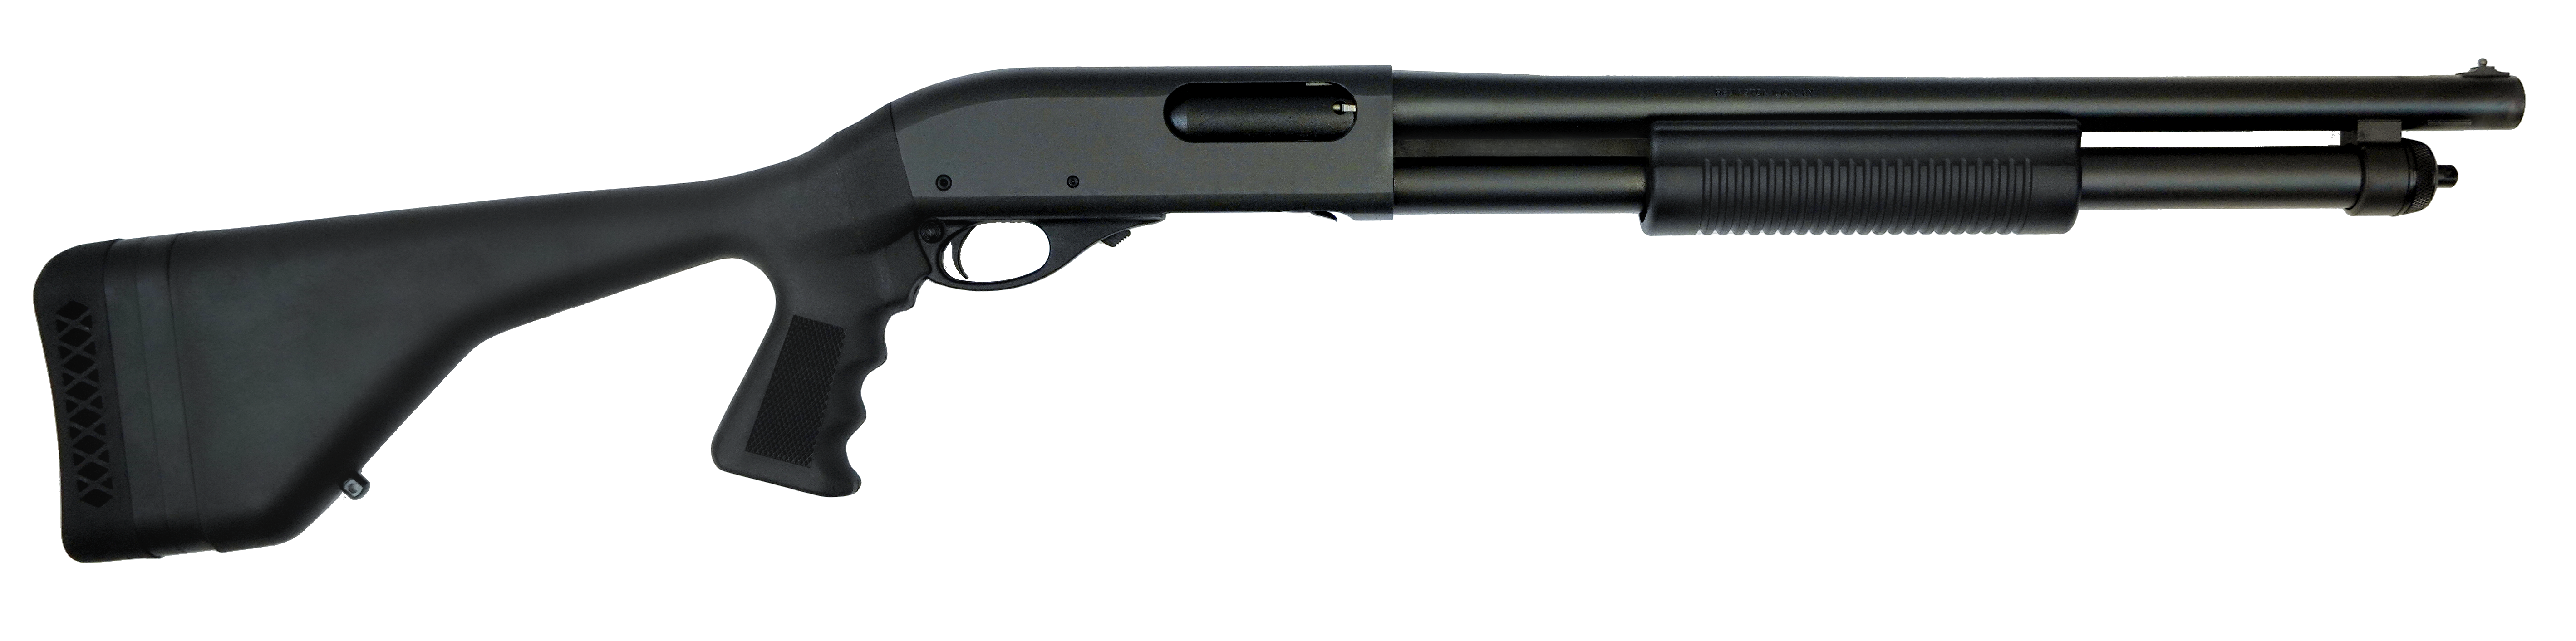 Model 870 Tactical Choate Pistol Grip